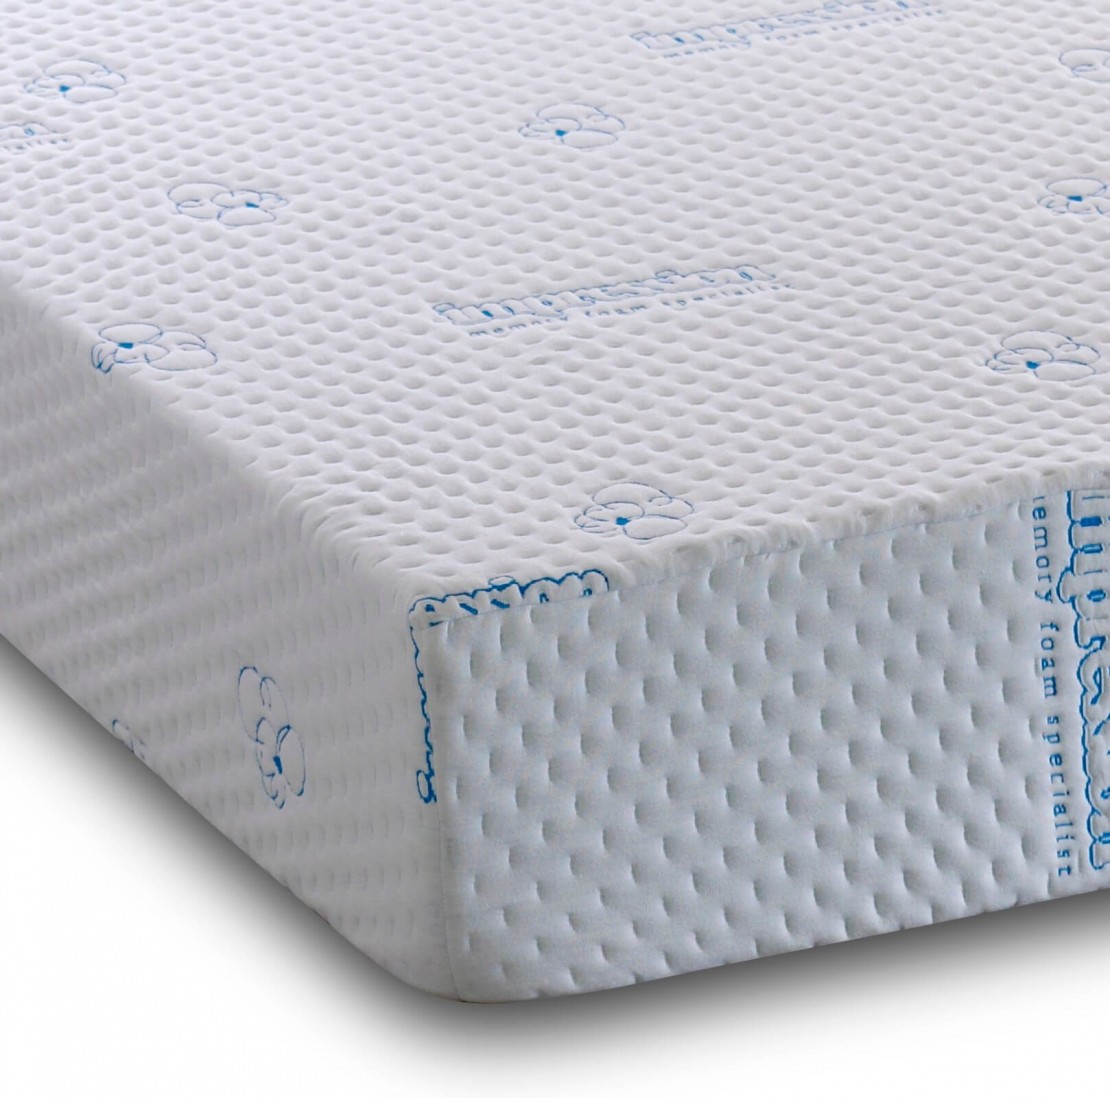 /_images/product-photos/visco-therapy-visco-3000-hd-memory-foam-regular-mattress-a.jpg